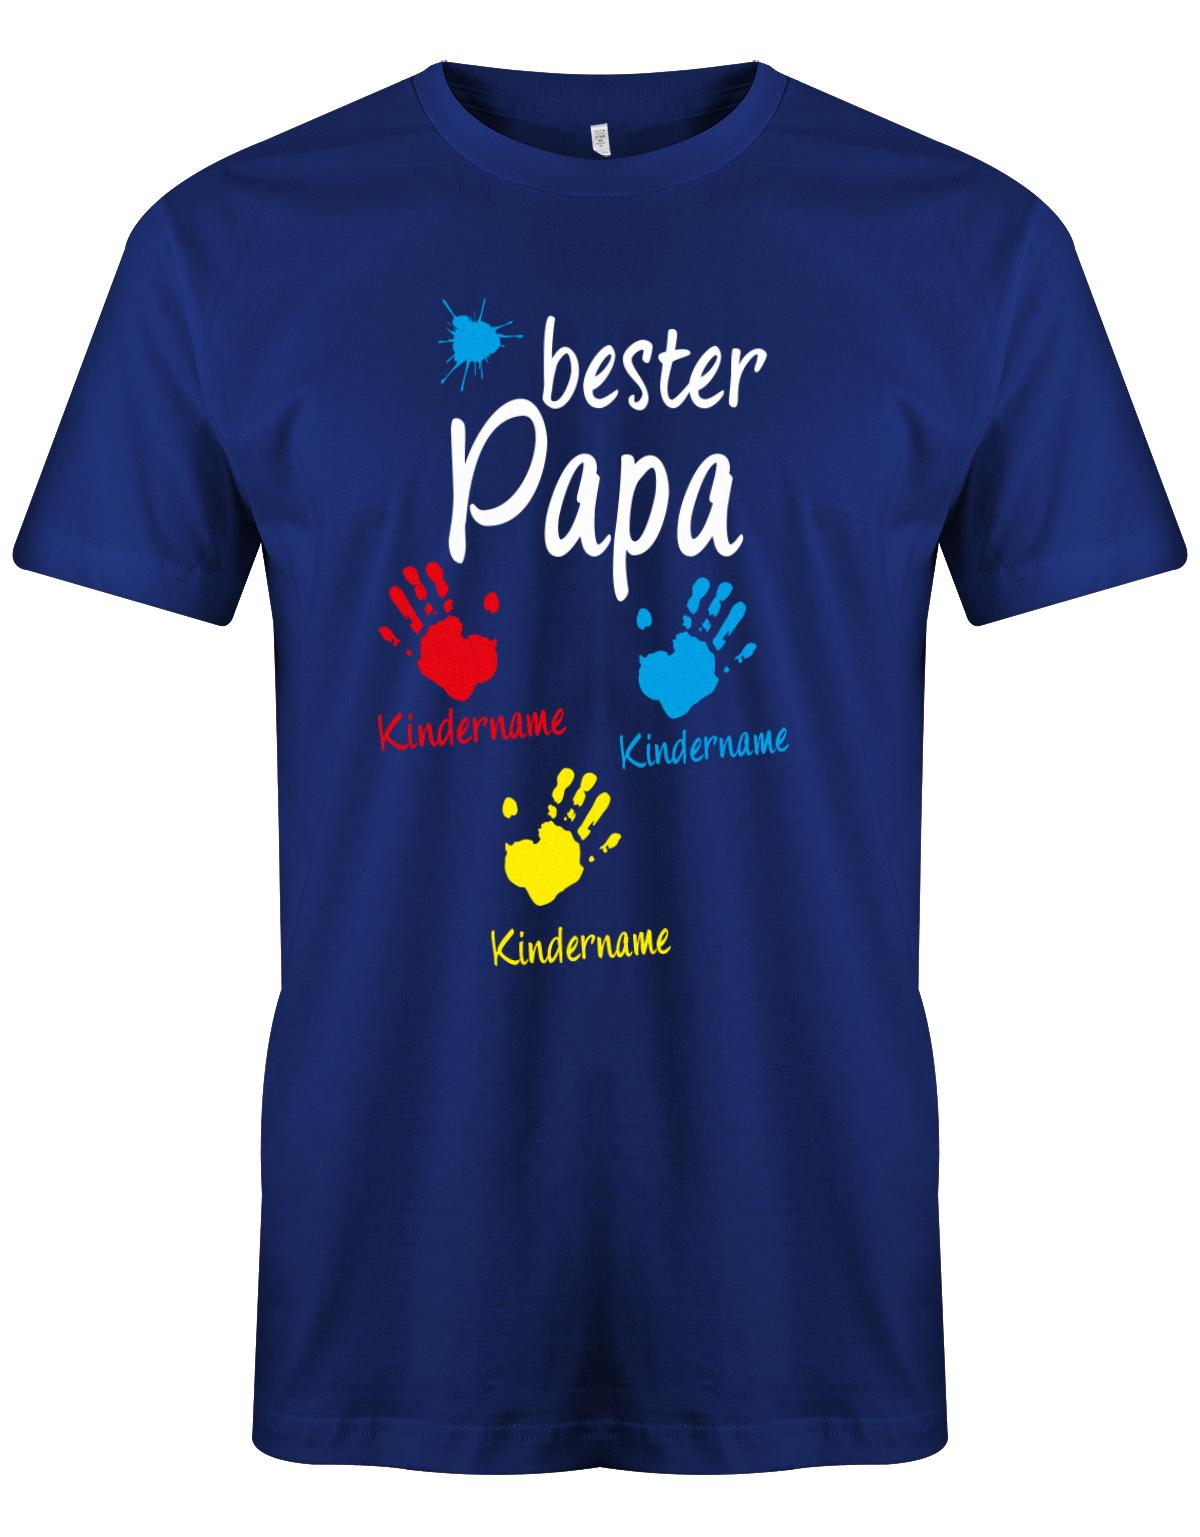 Bester Papa Farbklecks Kinder 3 Handabdruck Wunschname - Papa Shirt Herren Royalblau